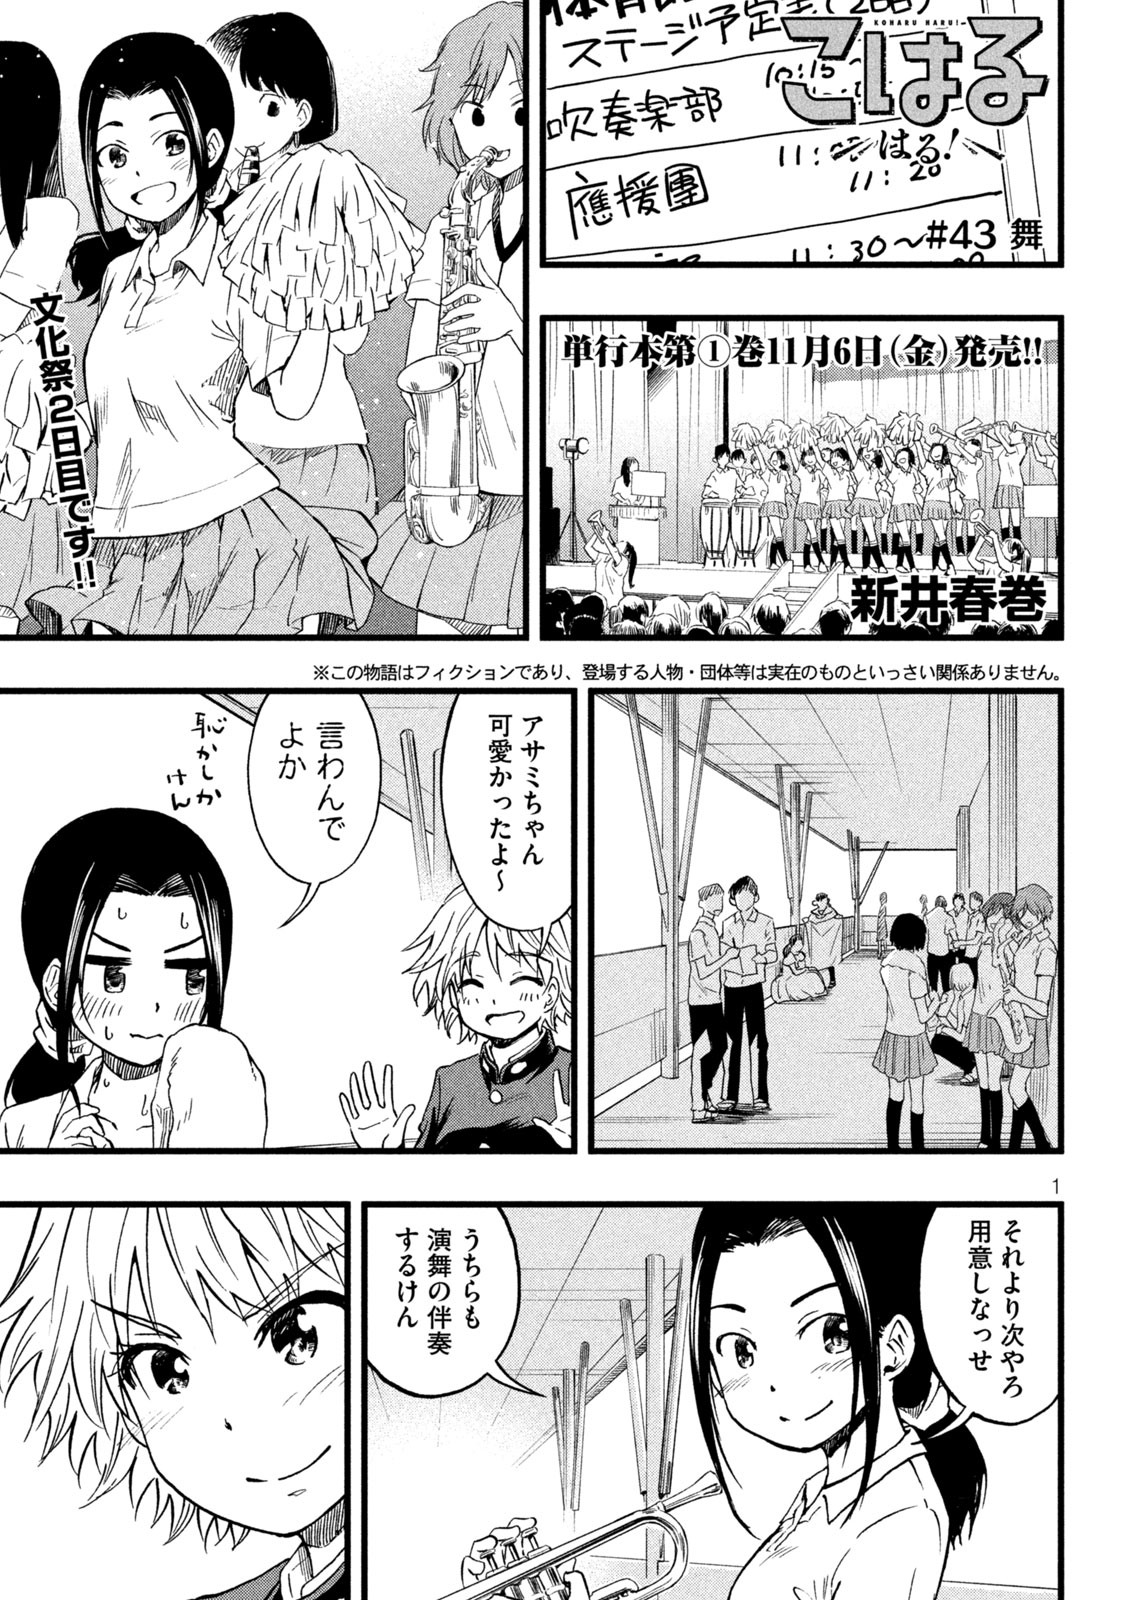 Koharu haru! - Chapter 43 - Page 1